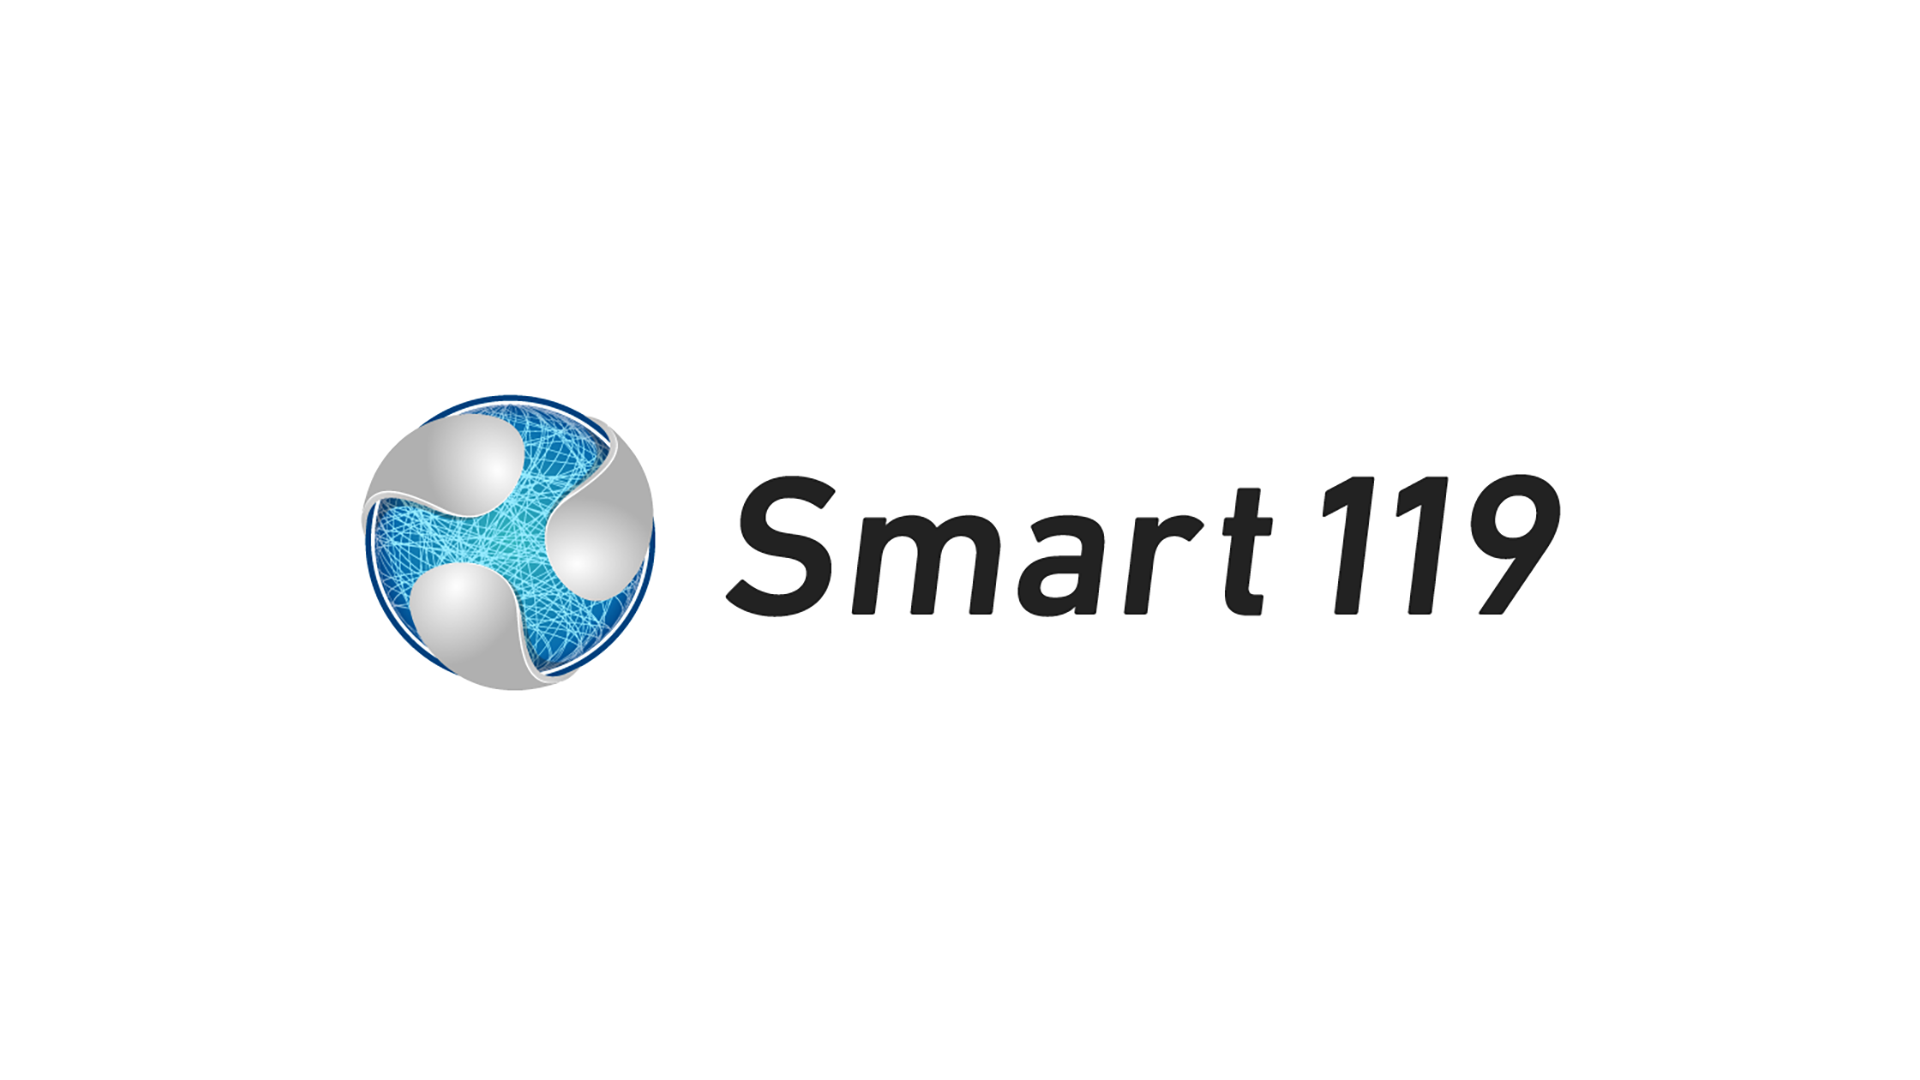 Smart119